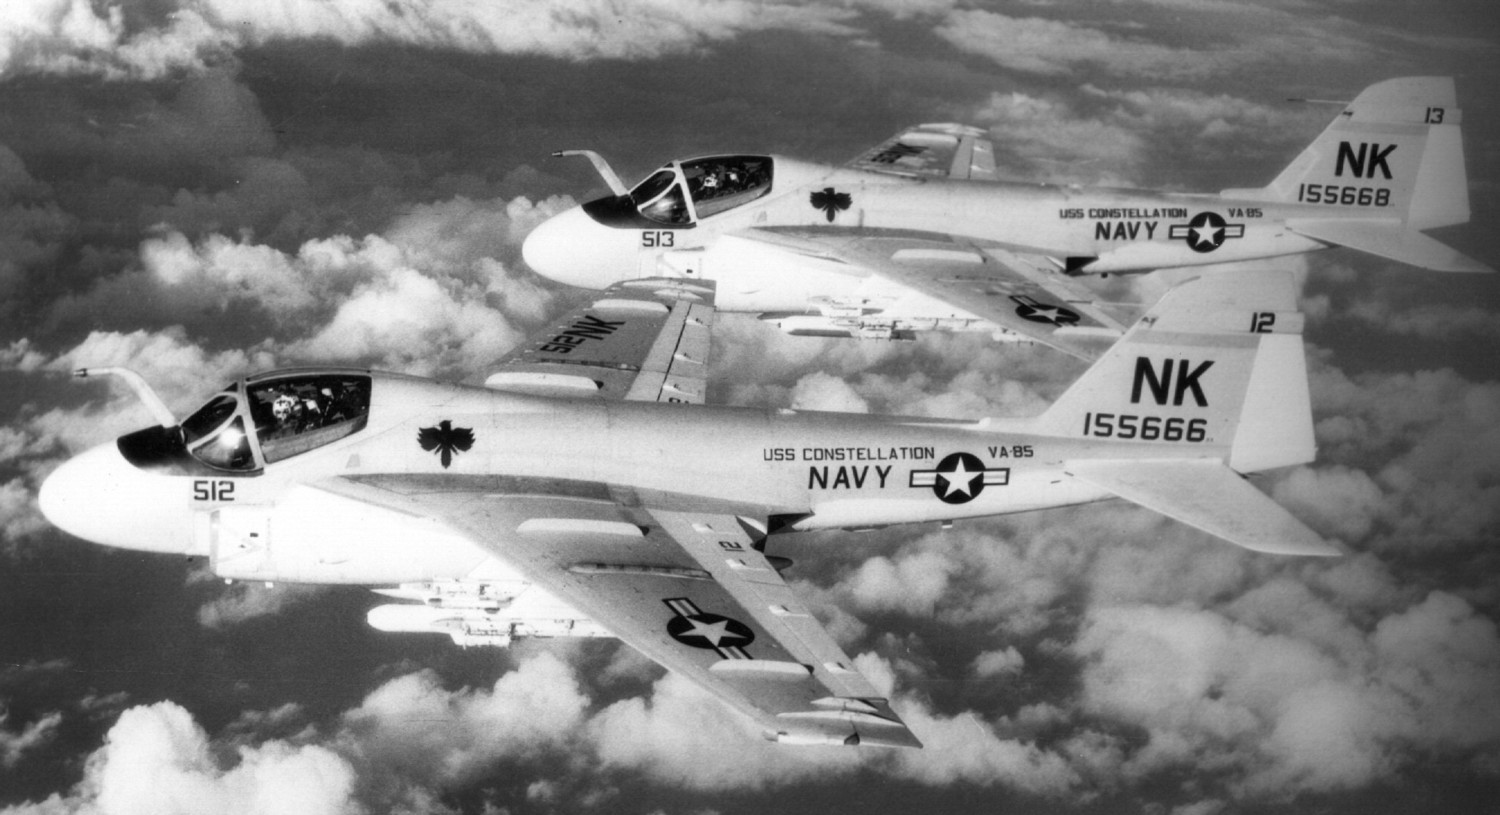 va-85 black falcons attack squadron us navy a-6a intruder carrier air wing cvw-14 uss constellation cva-64 30